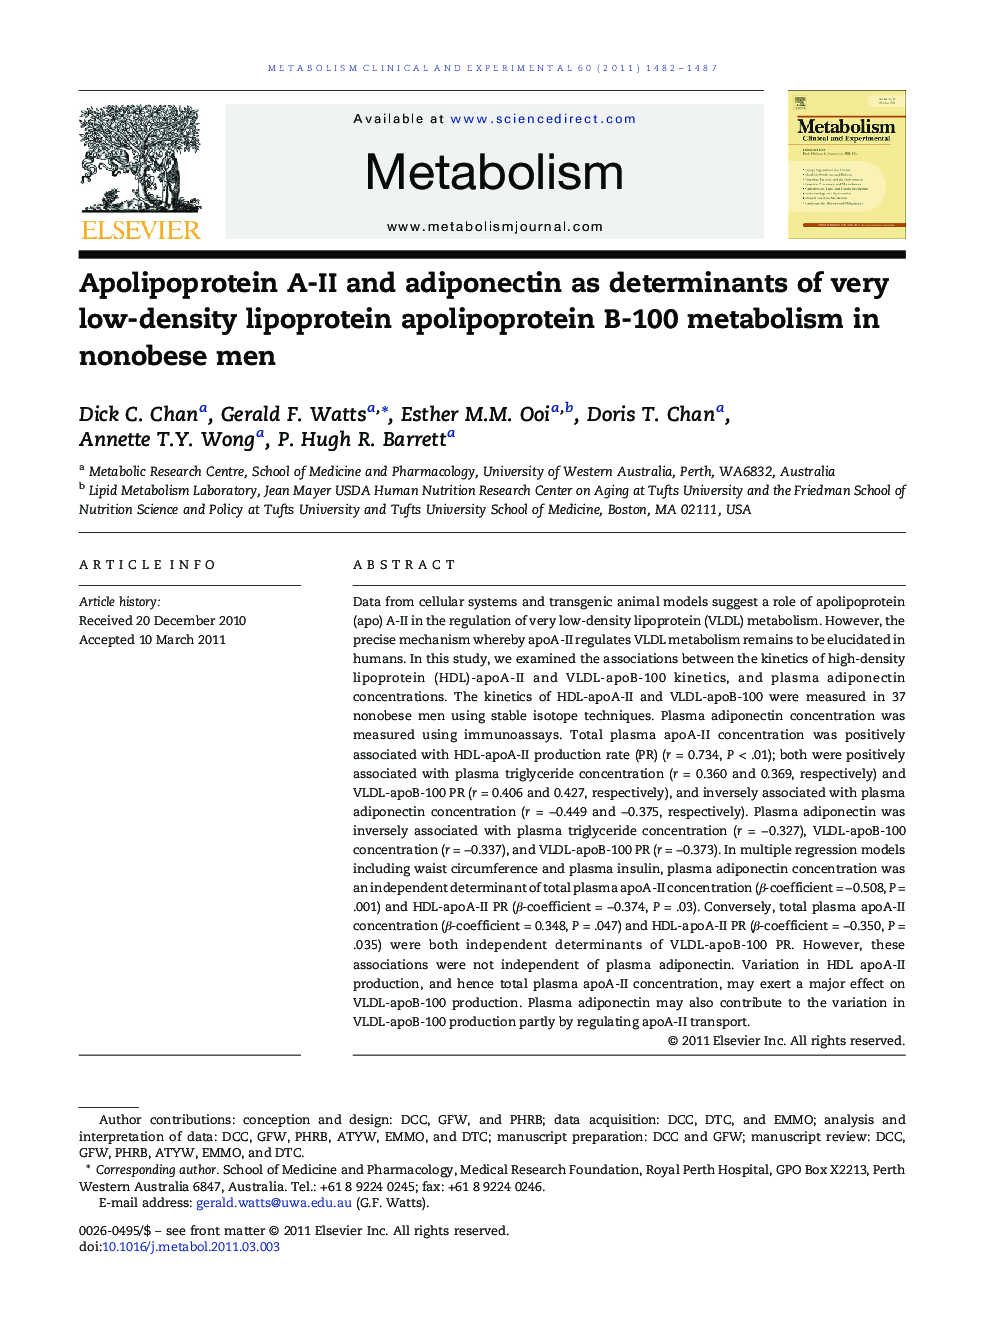 Apolipoprotein A-II and adiponectin as determinants of very low-density lipoprotein apolipoprotein B-100 metabolism in nonobese men